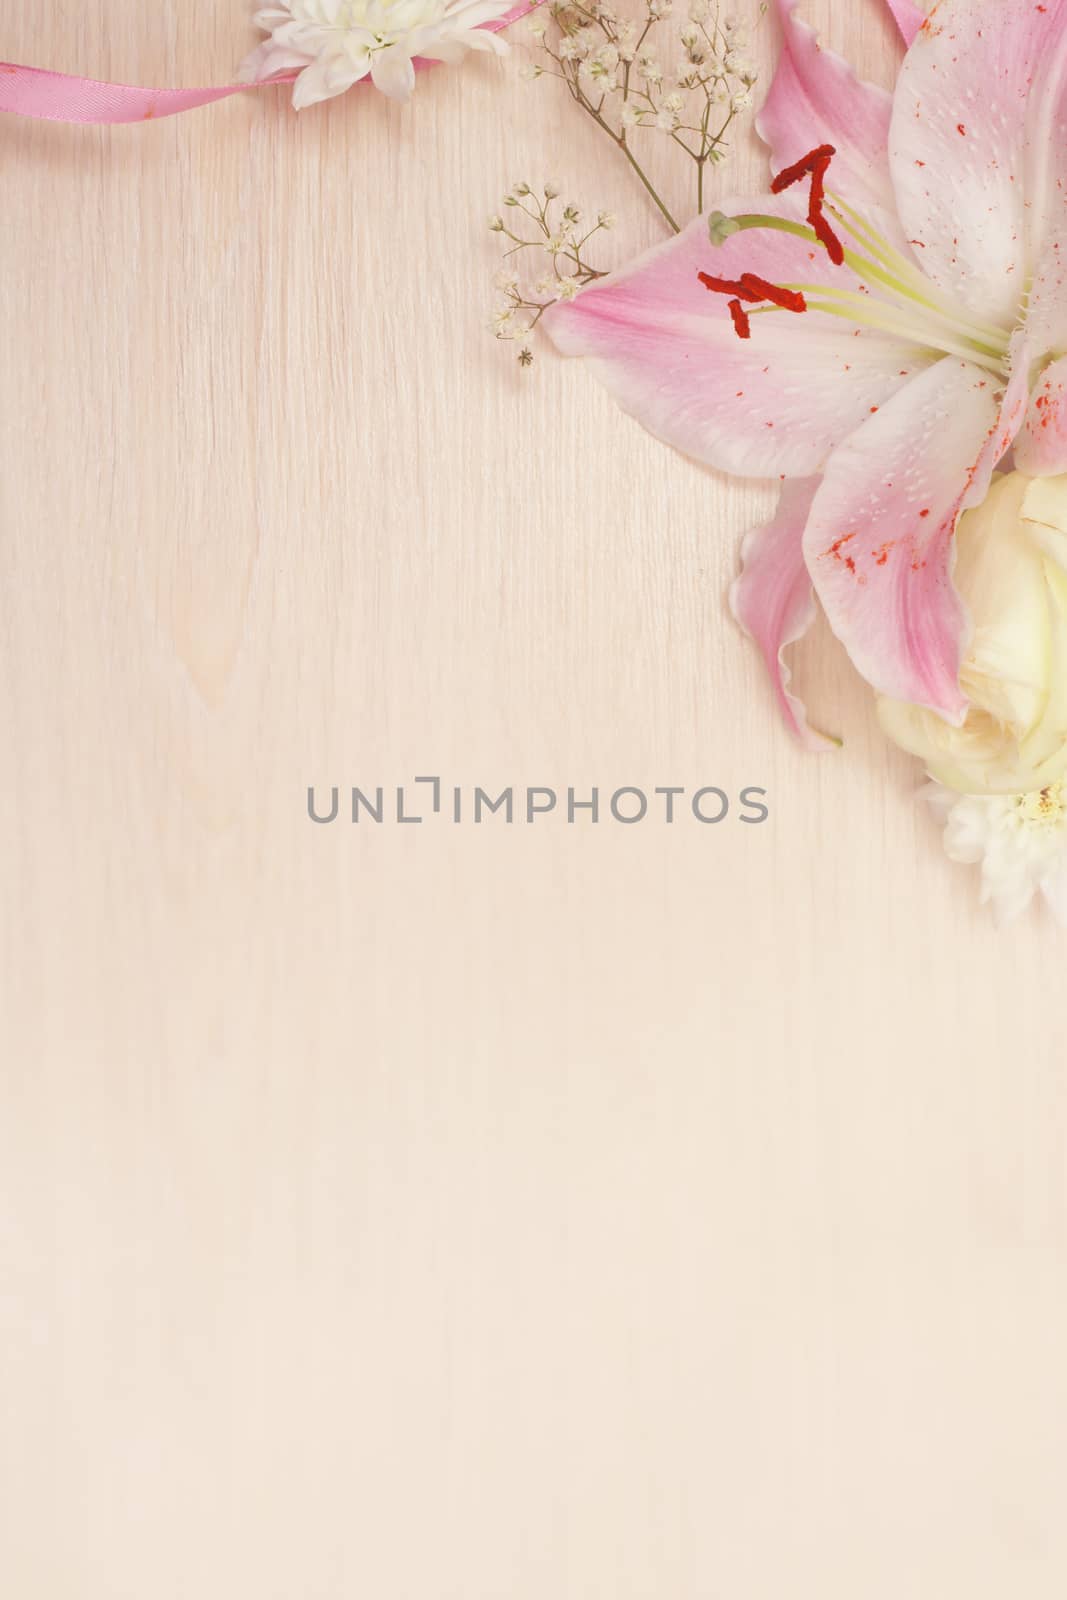 Lily on wooden background by destillat